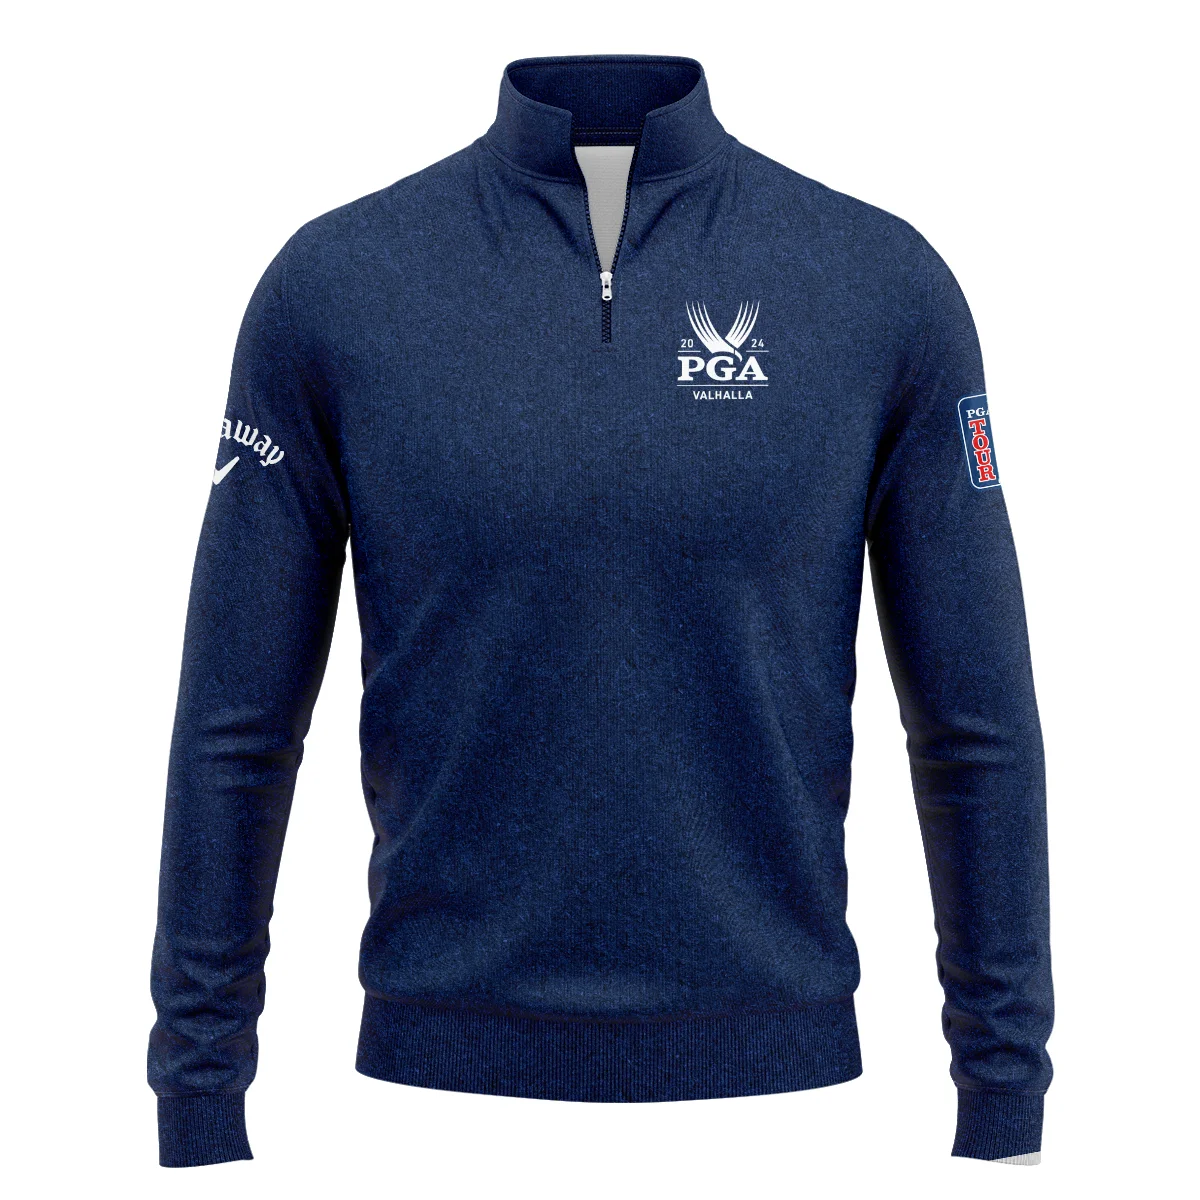 Special Version 2024 PGA Championship Valhalla Callaway Unisex Sweatshirt Blue Paperboard Texture Sweatshirt